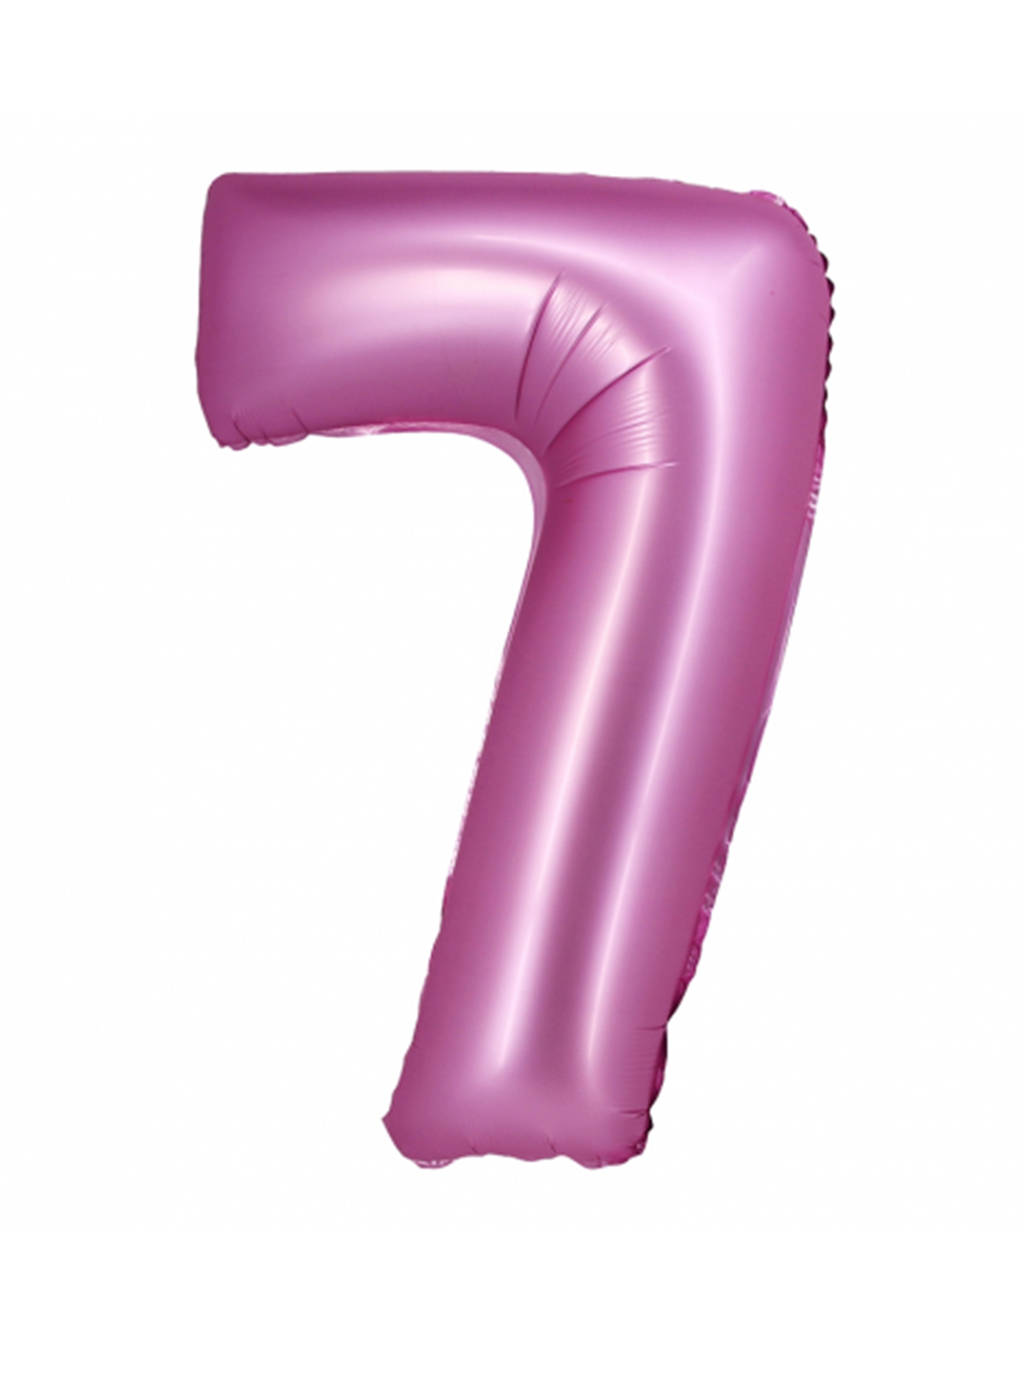 Satynowy różowy balon B&C cyfra "7" -76cm